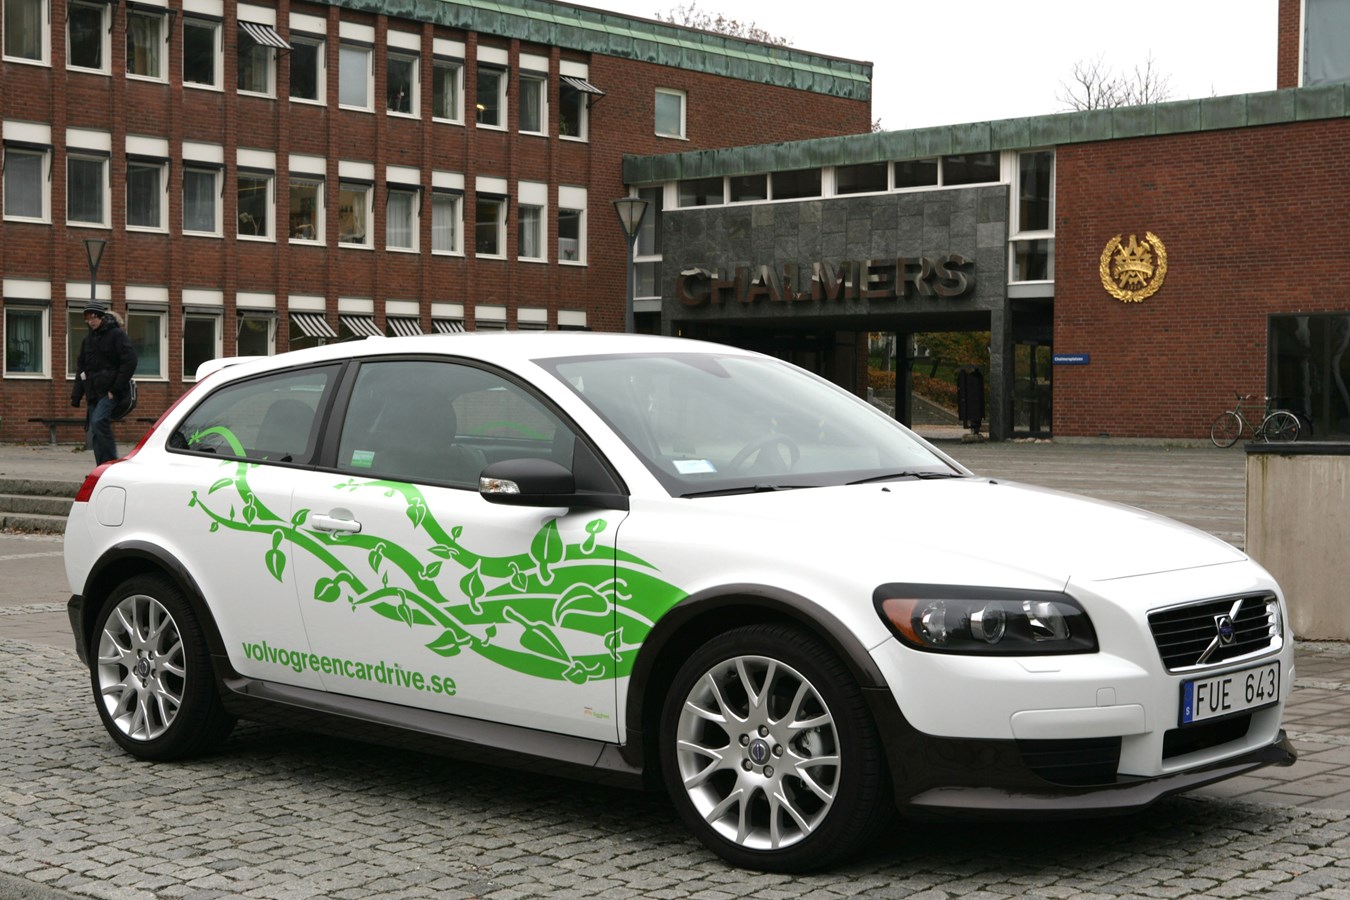 Volvo Green Car Drive